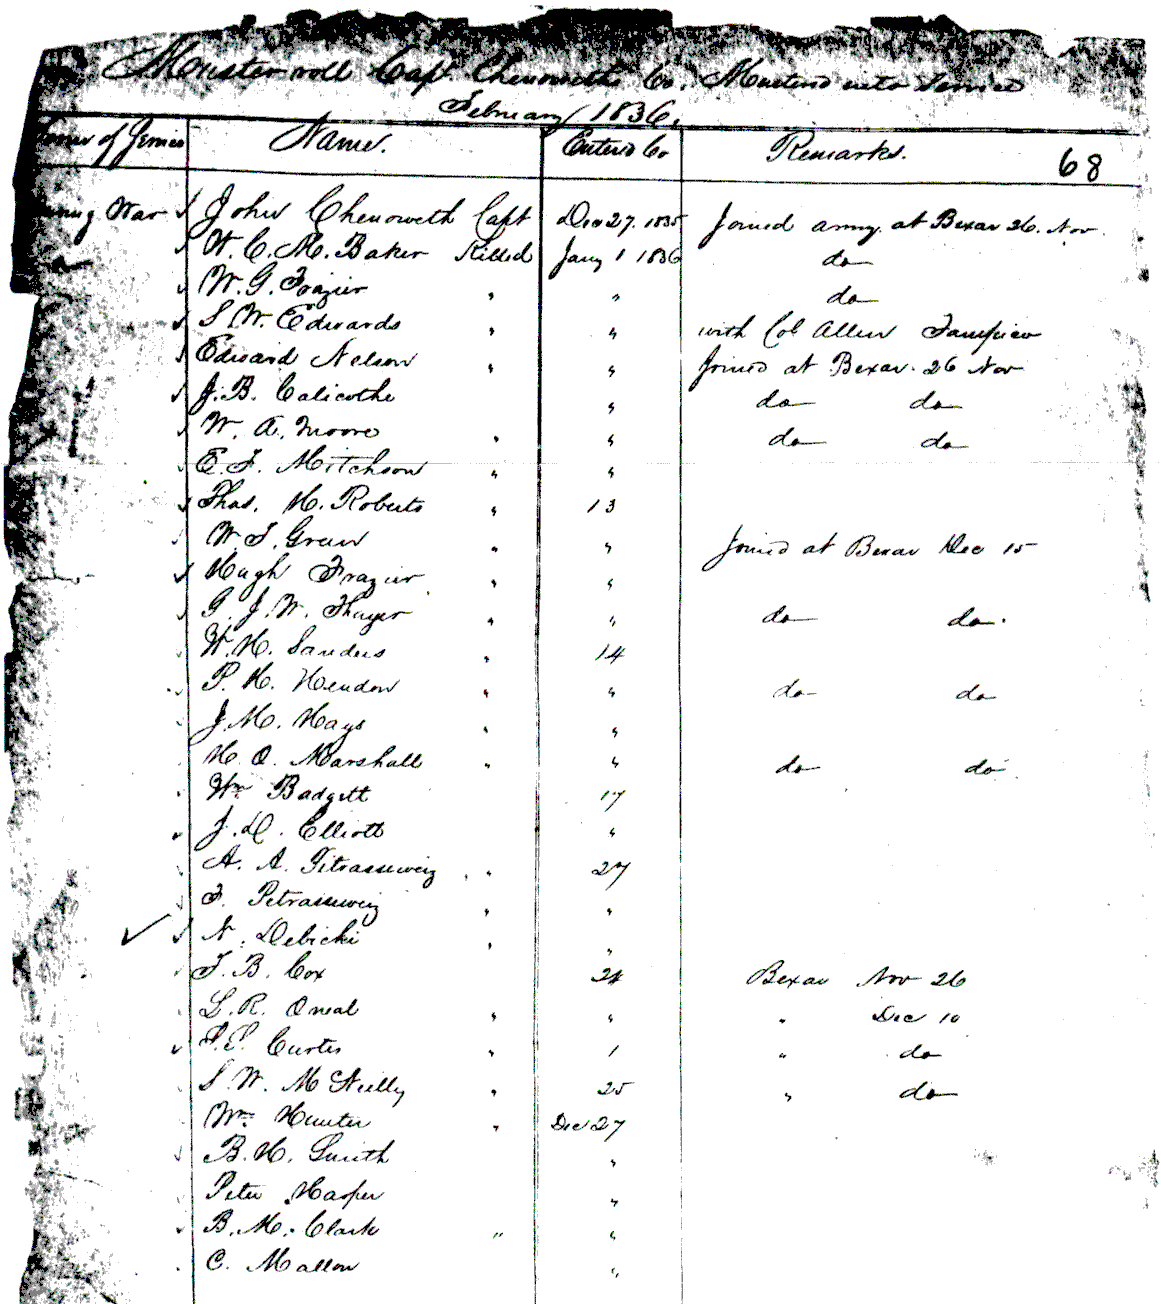 muster roll of capt. john chenoweth's company, feb. 1836